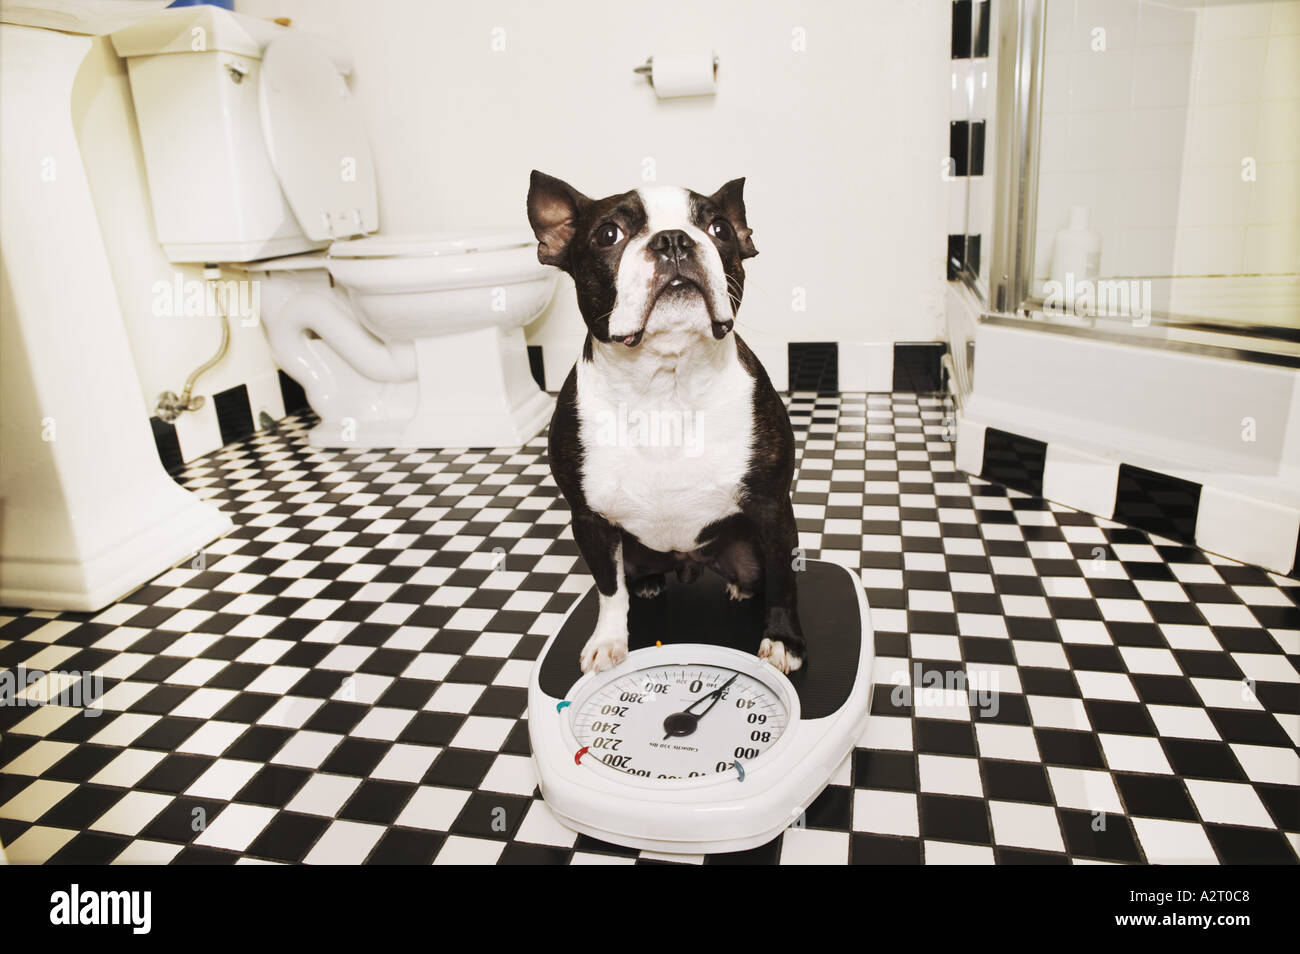 Dog on a bathroom scale Stock Photo